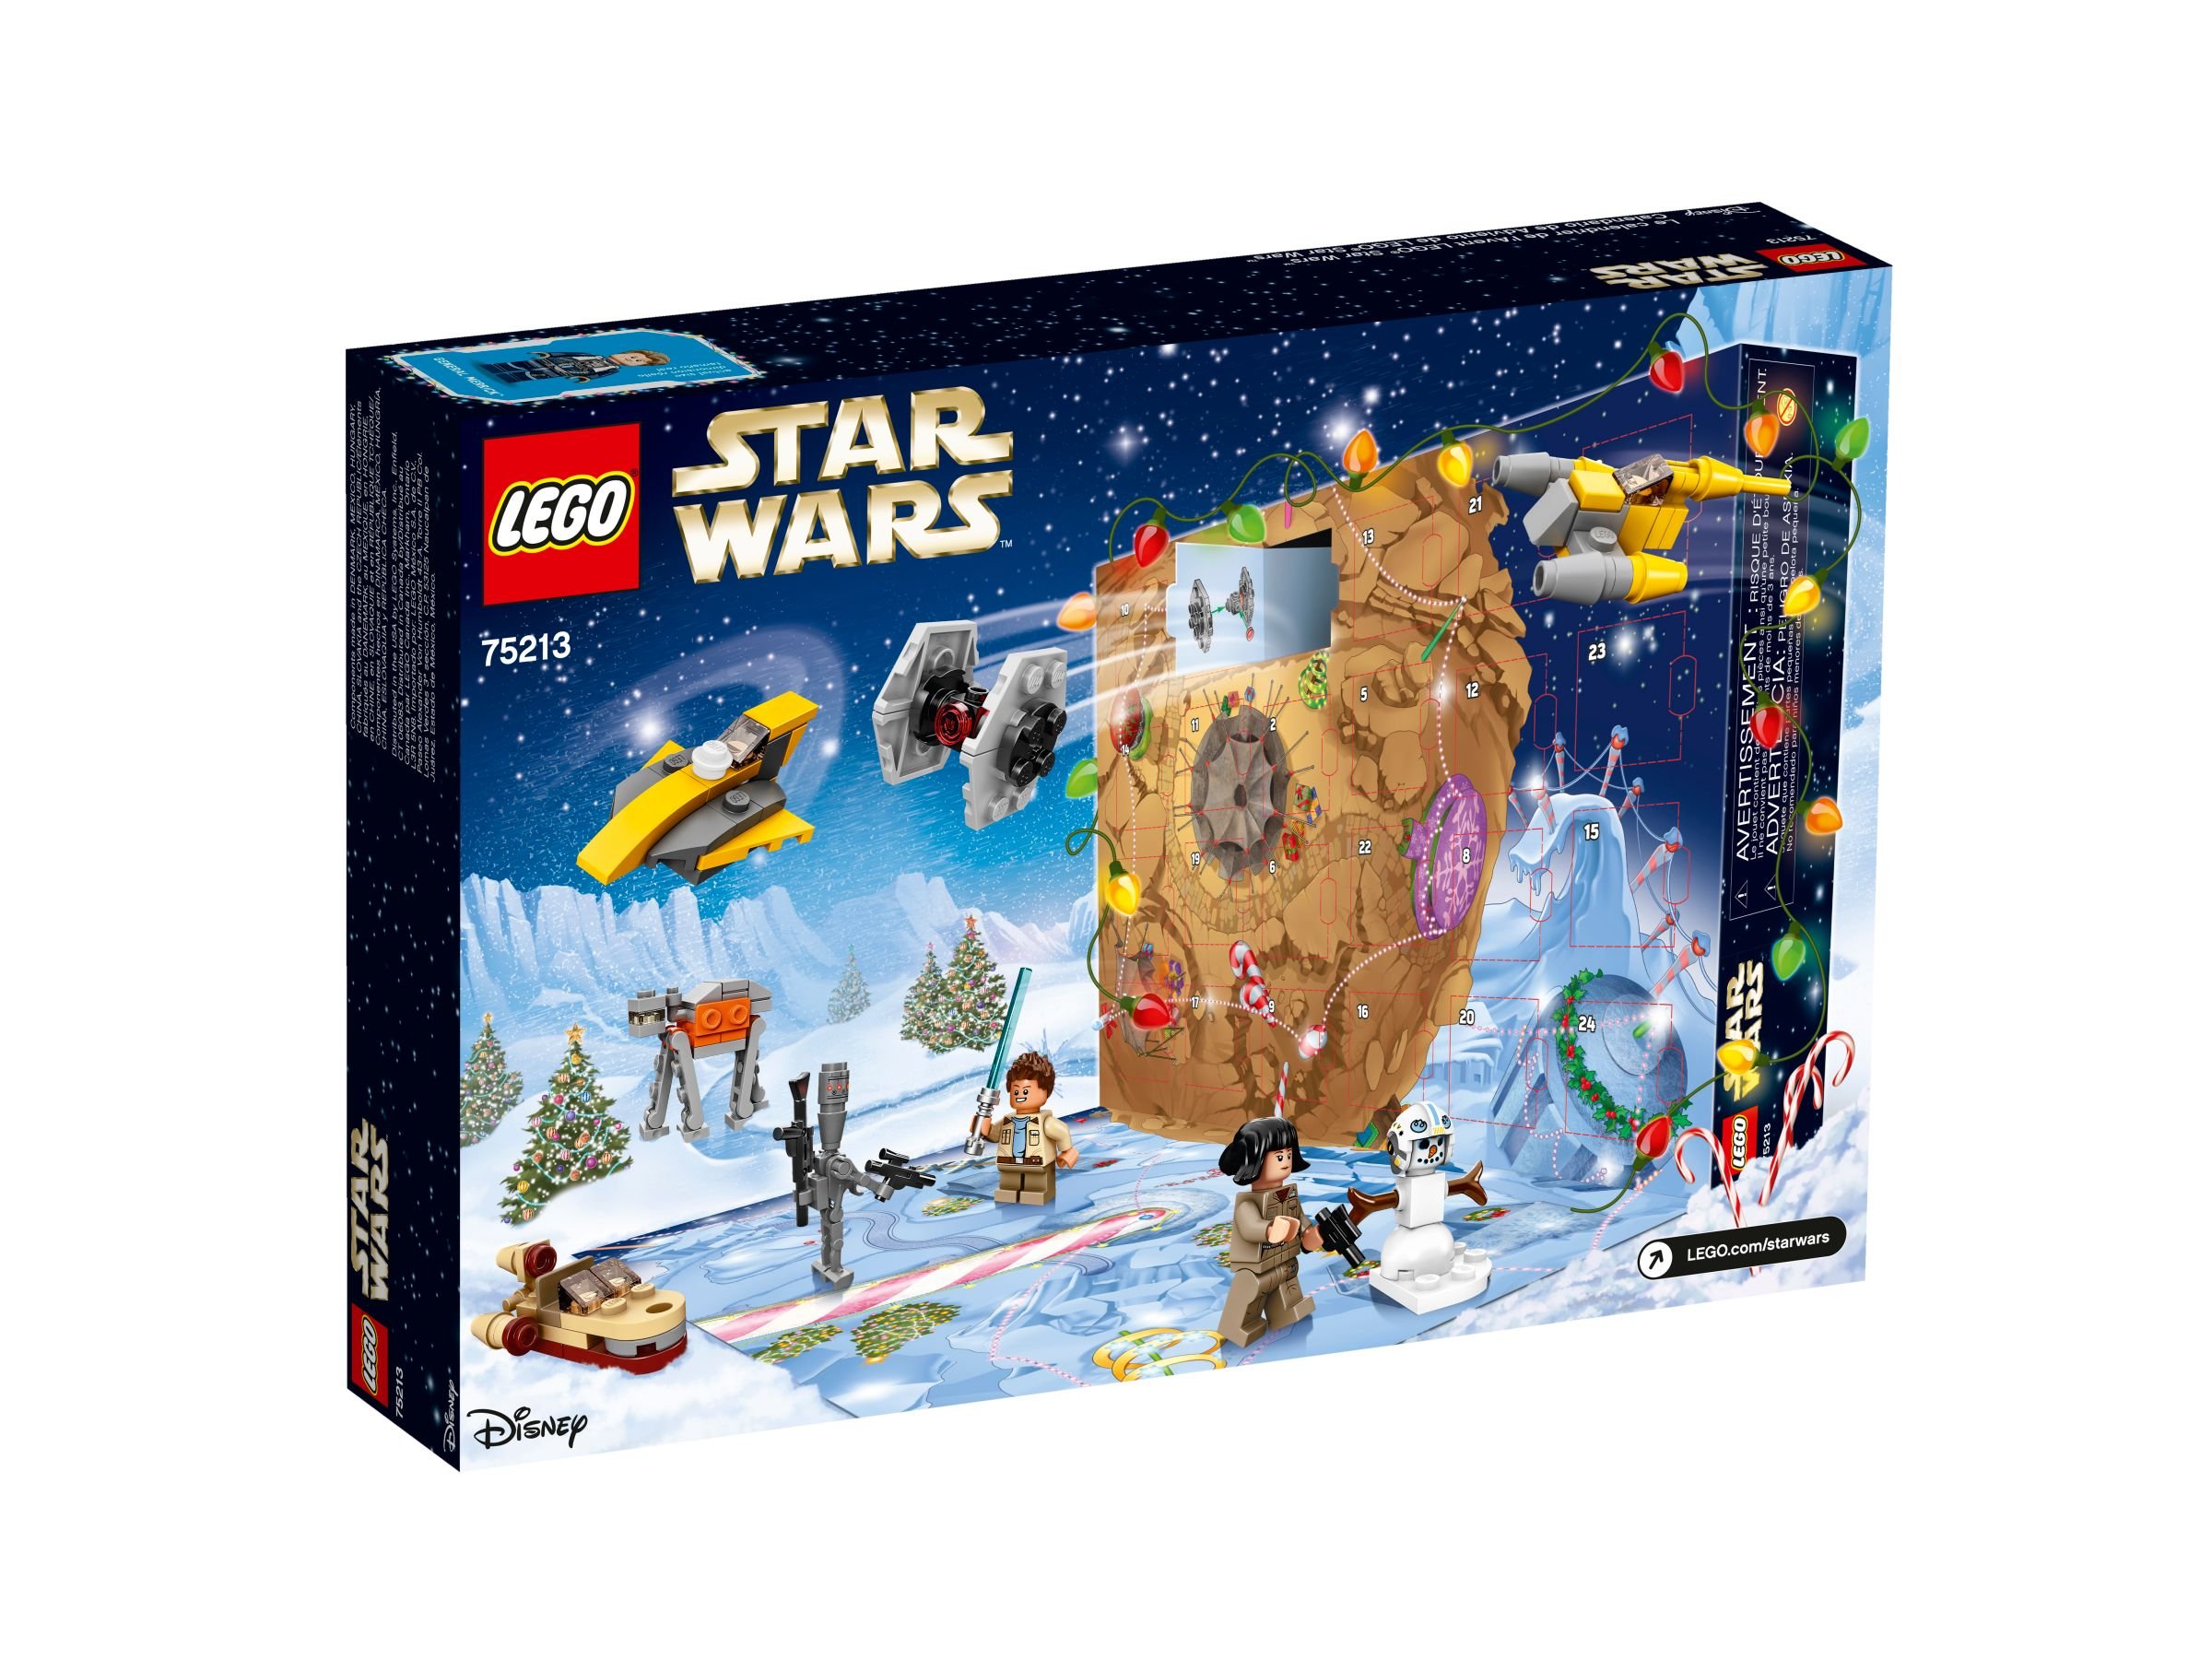 LEGO Star Wars 75213 Star Wars Adventskalender 2018 LEGO_75213_alt2.jpg